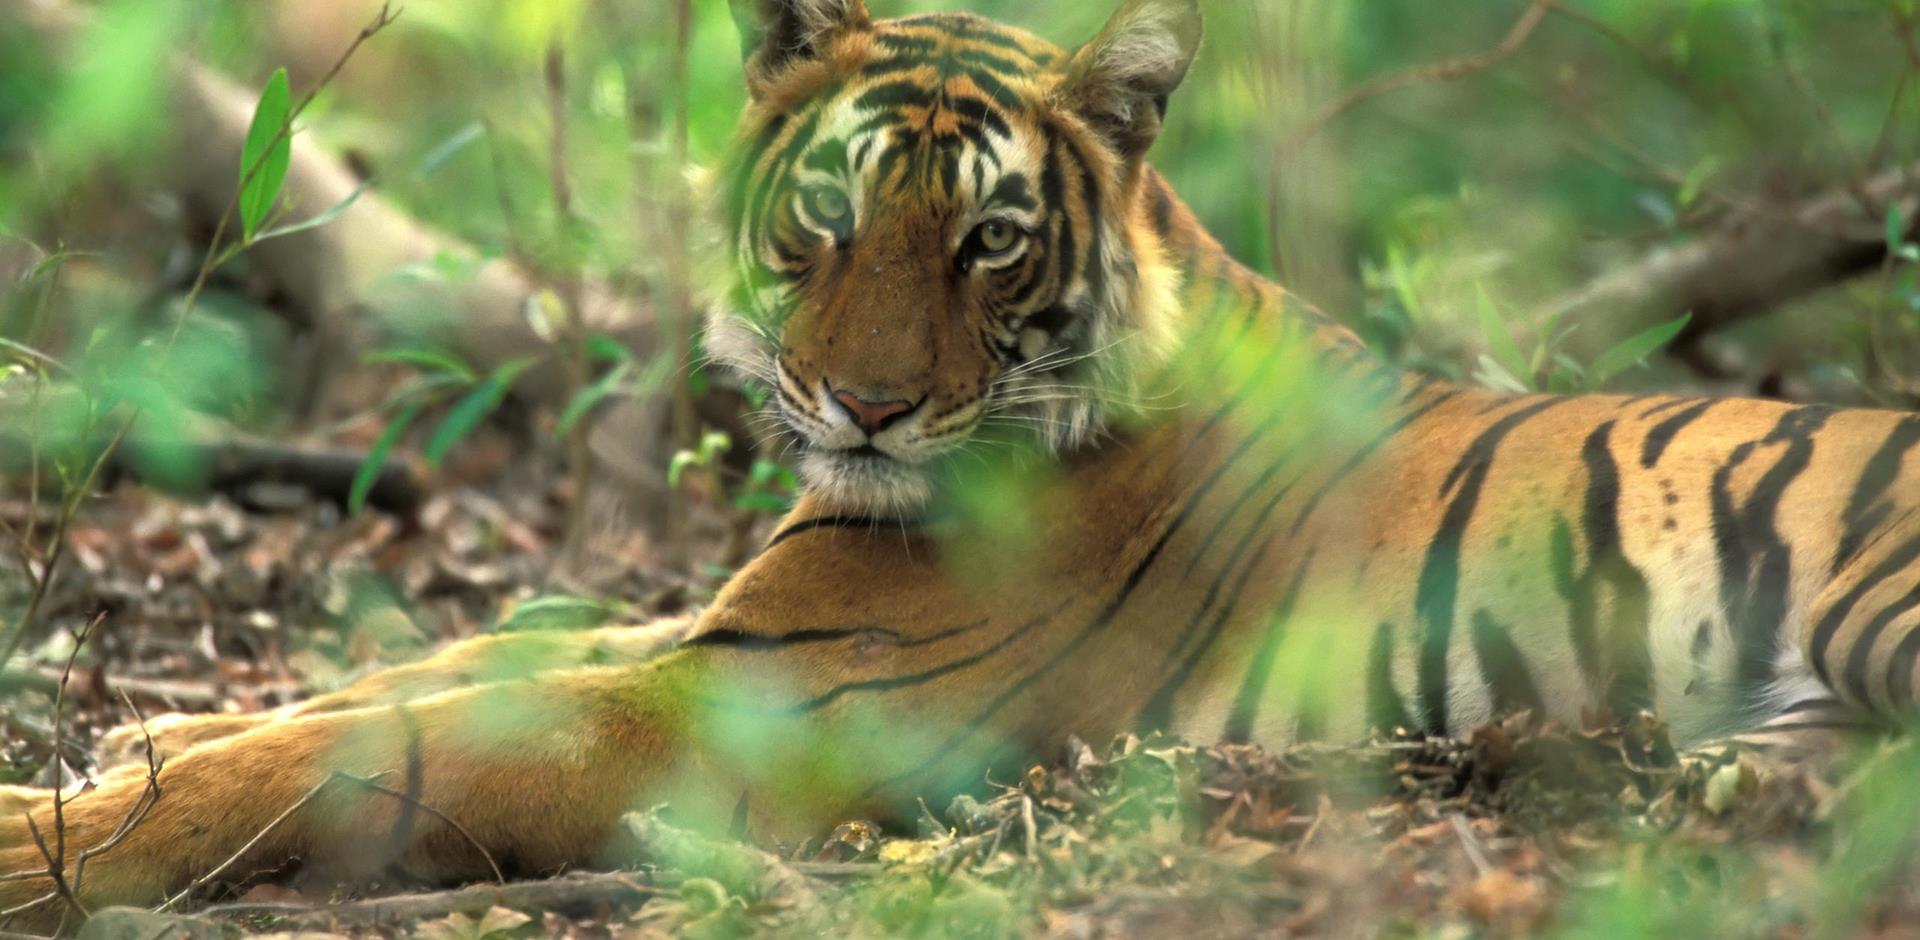 Tiger, India Subcontinent